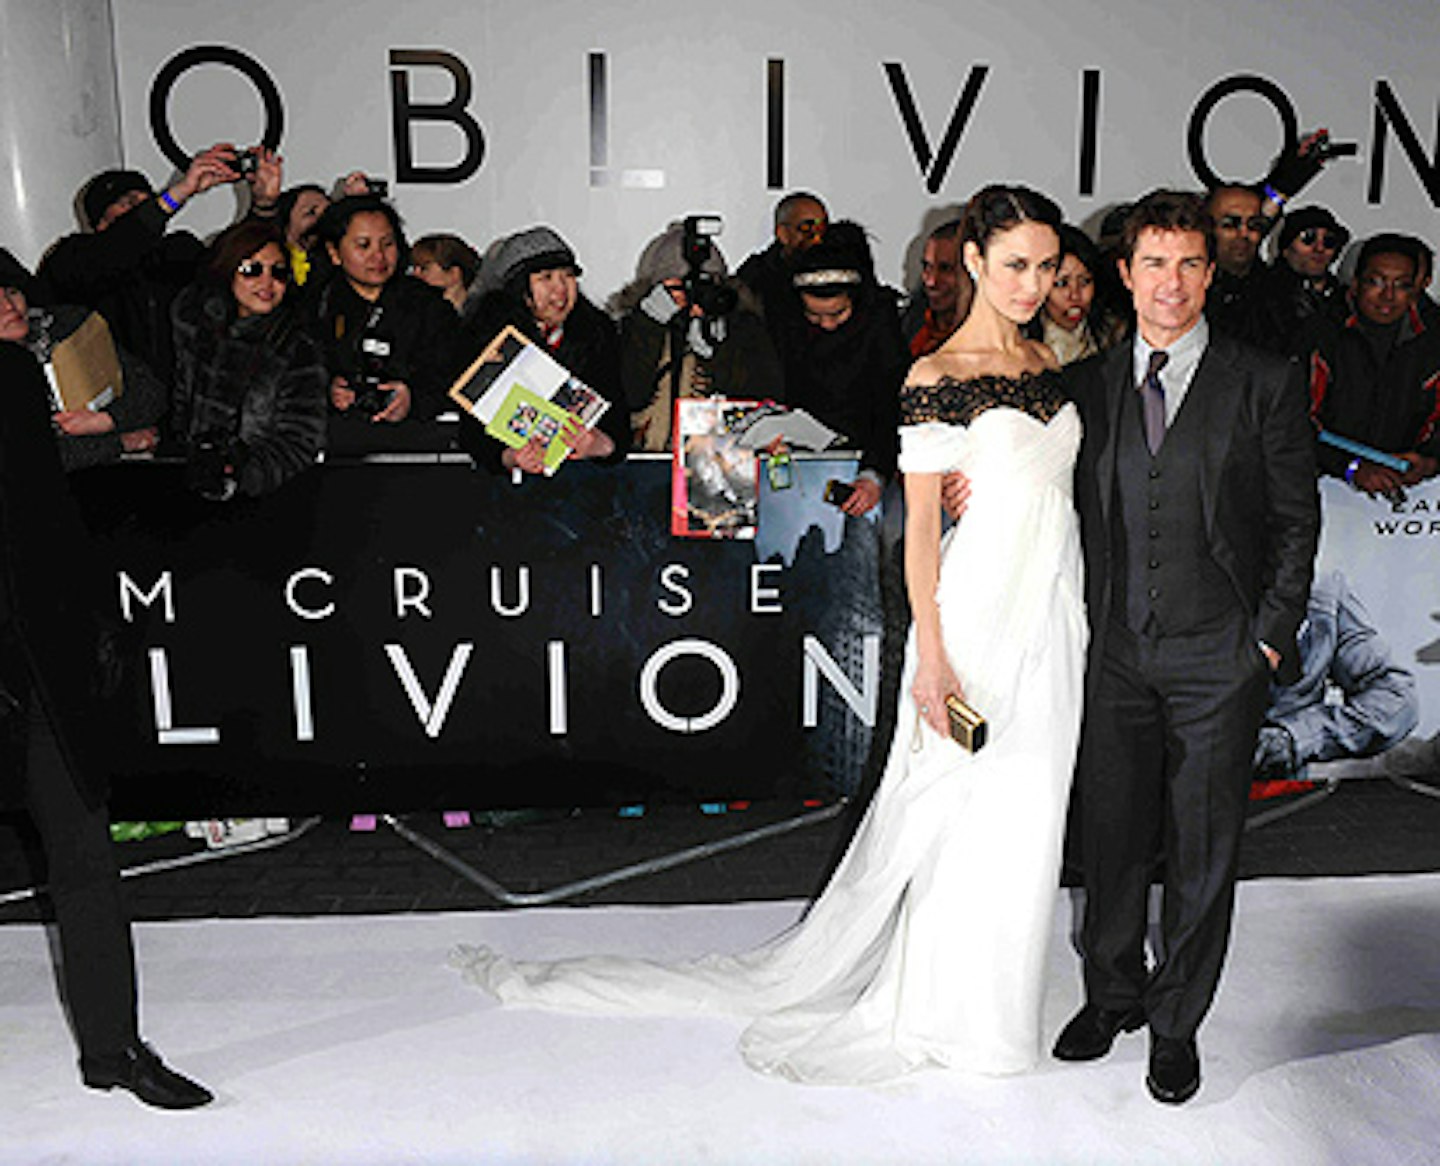 Oblivion UK Premiere